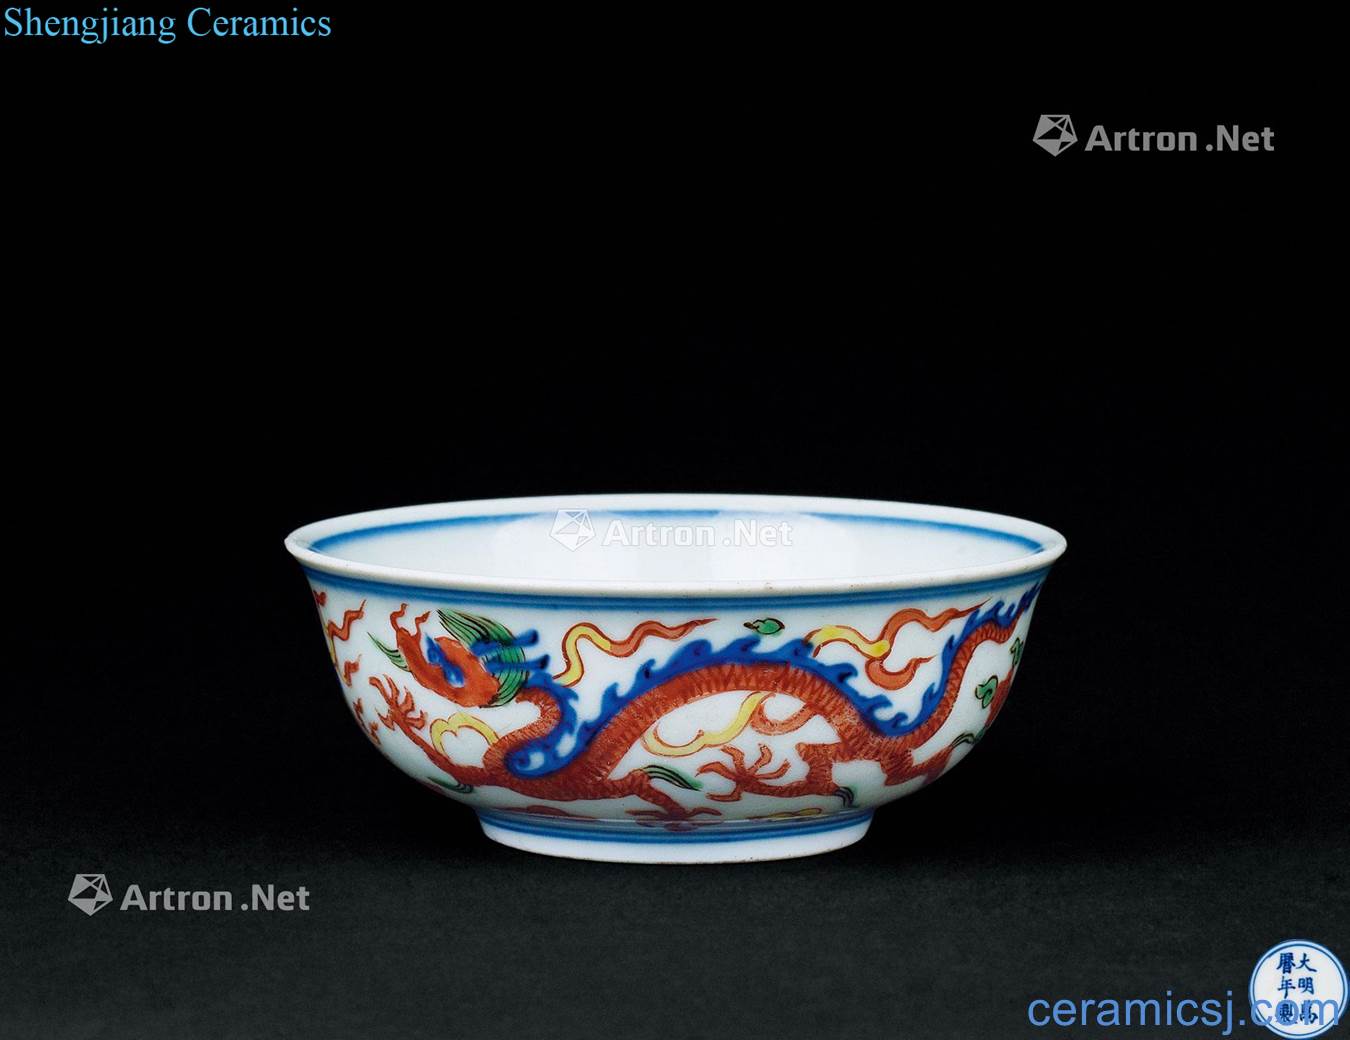 Ming wanli (1573-1619) praised green-splashed bowls